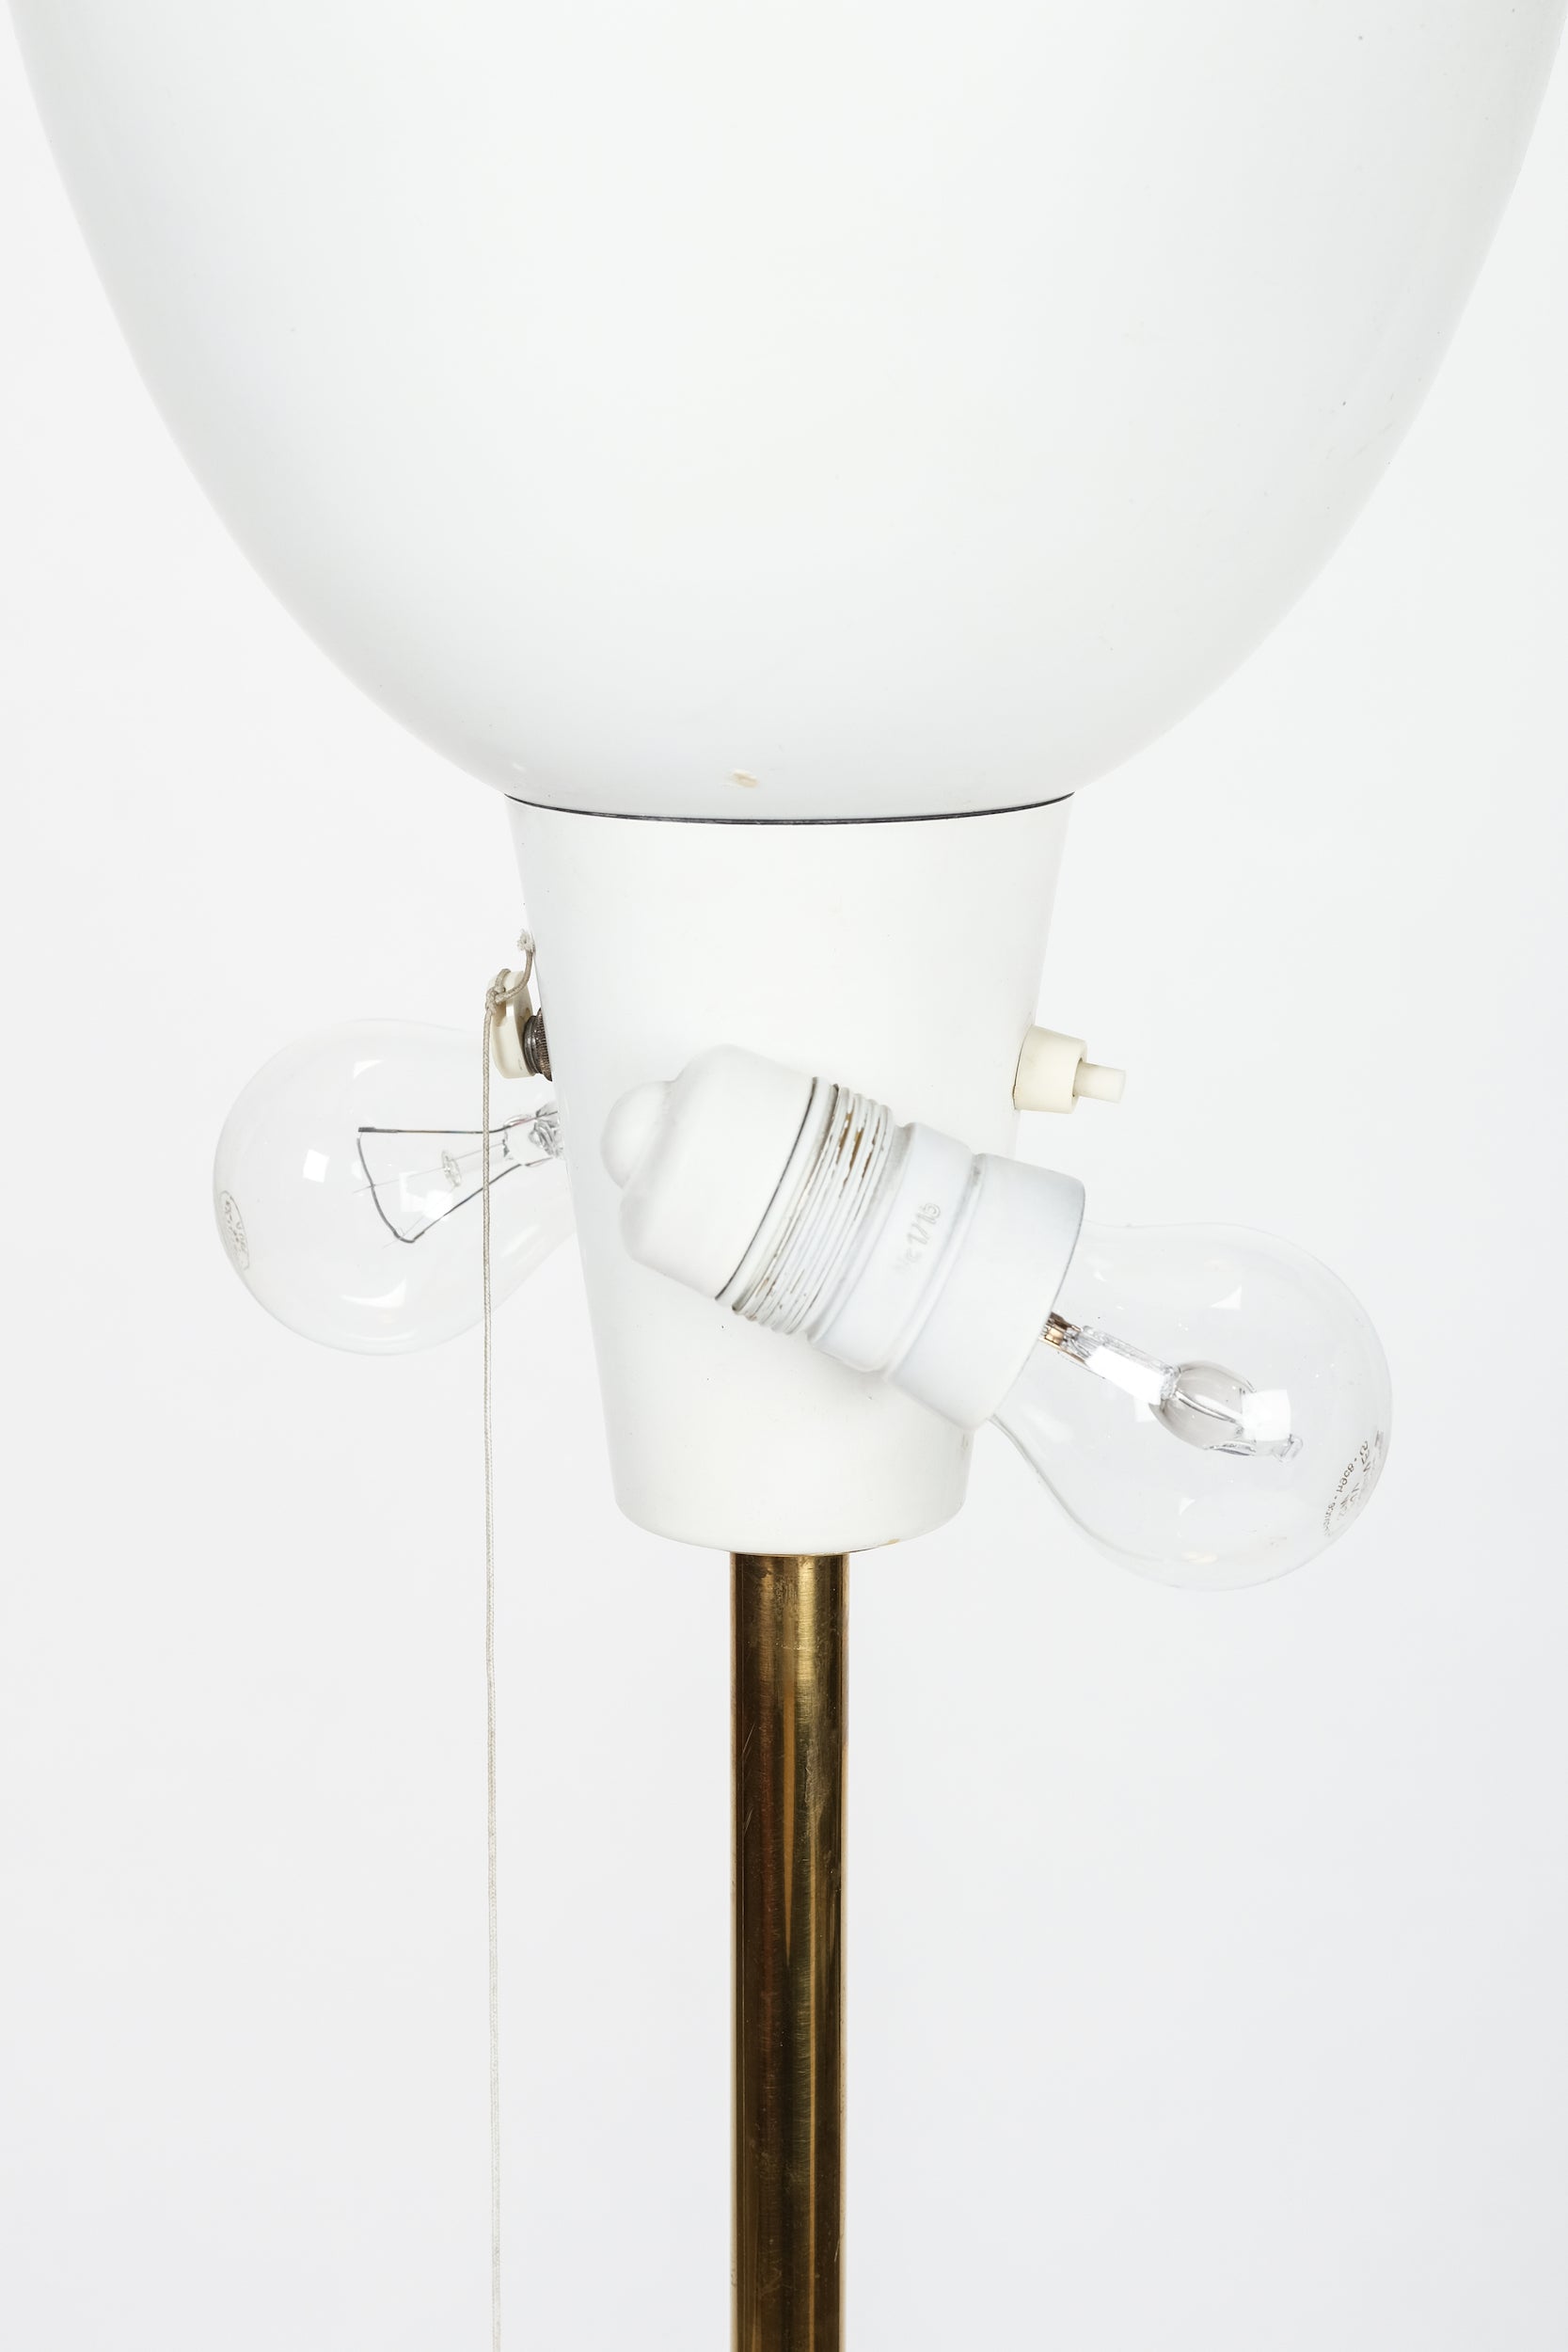 Bauhaus style, floor lamp, switzerland, 30s